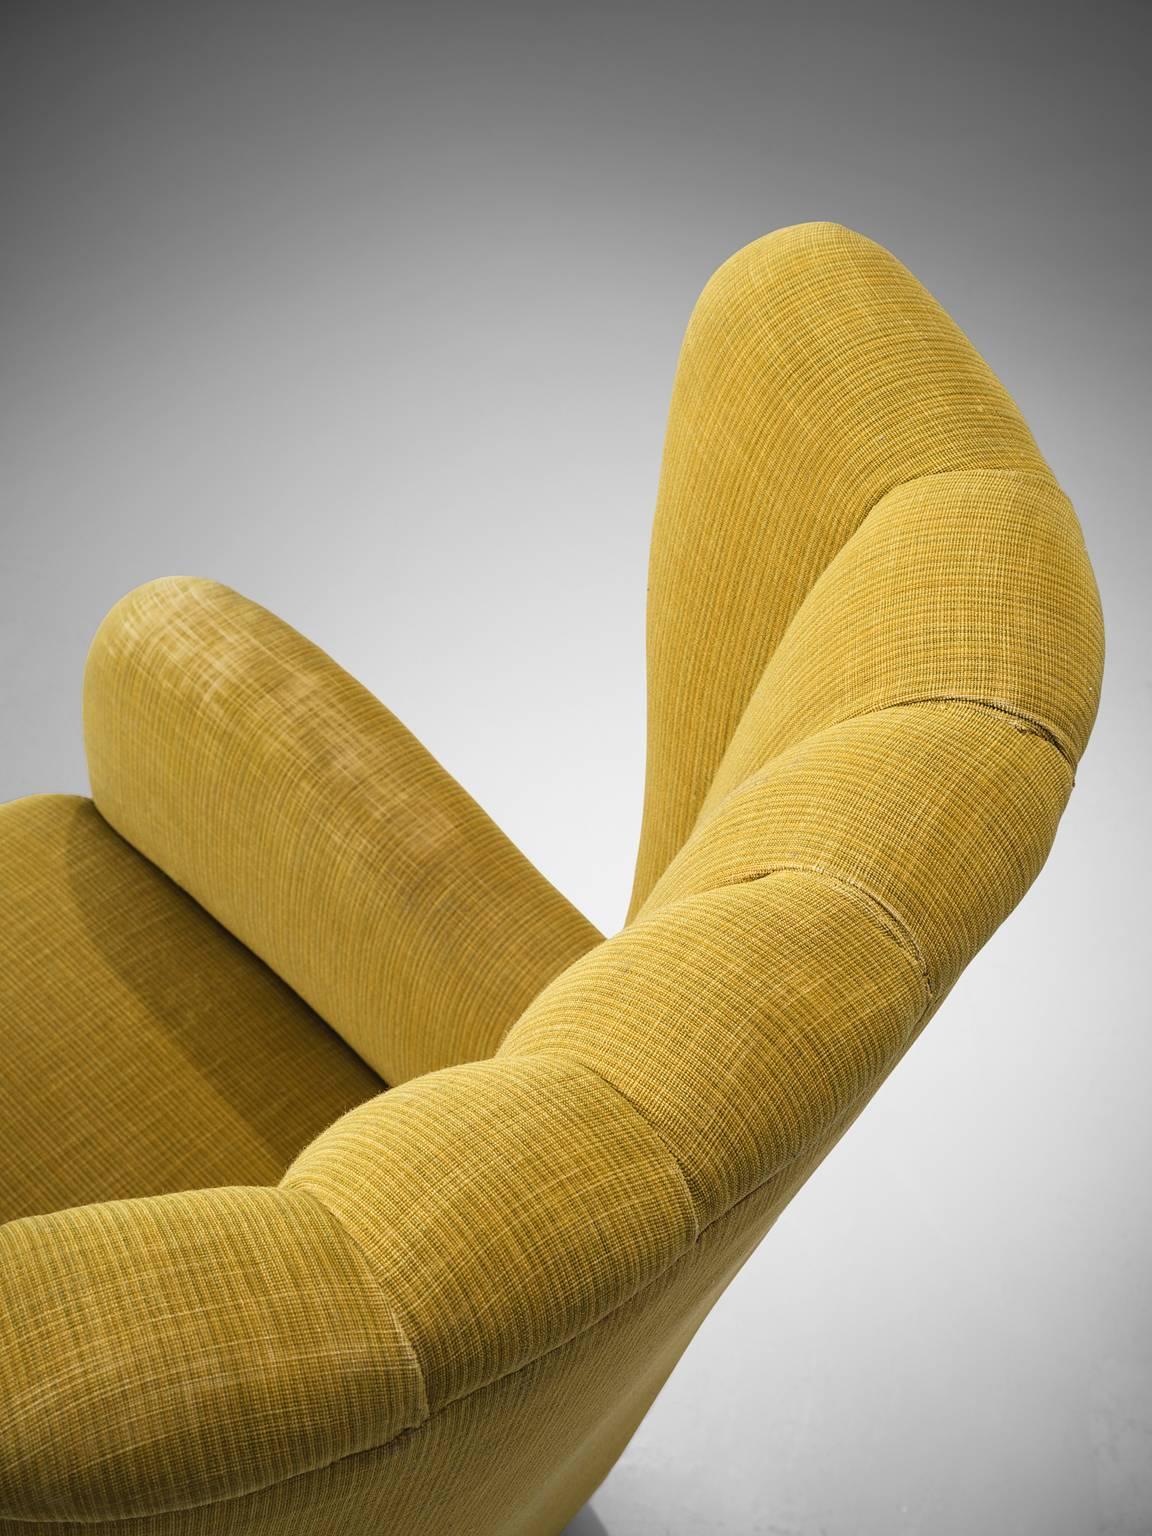 Danish Wingback Chair in Original Yellow Upholstery 1